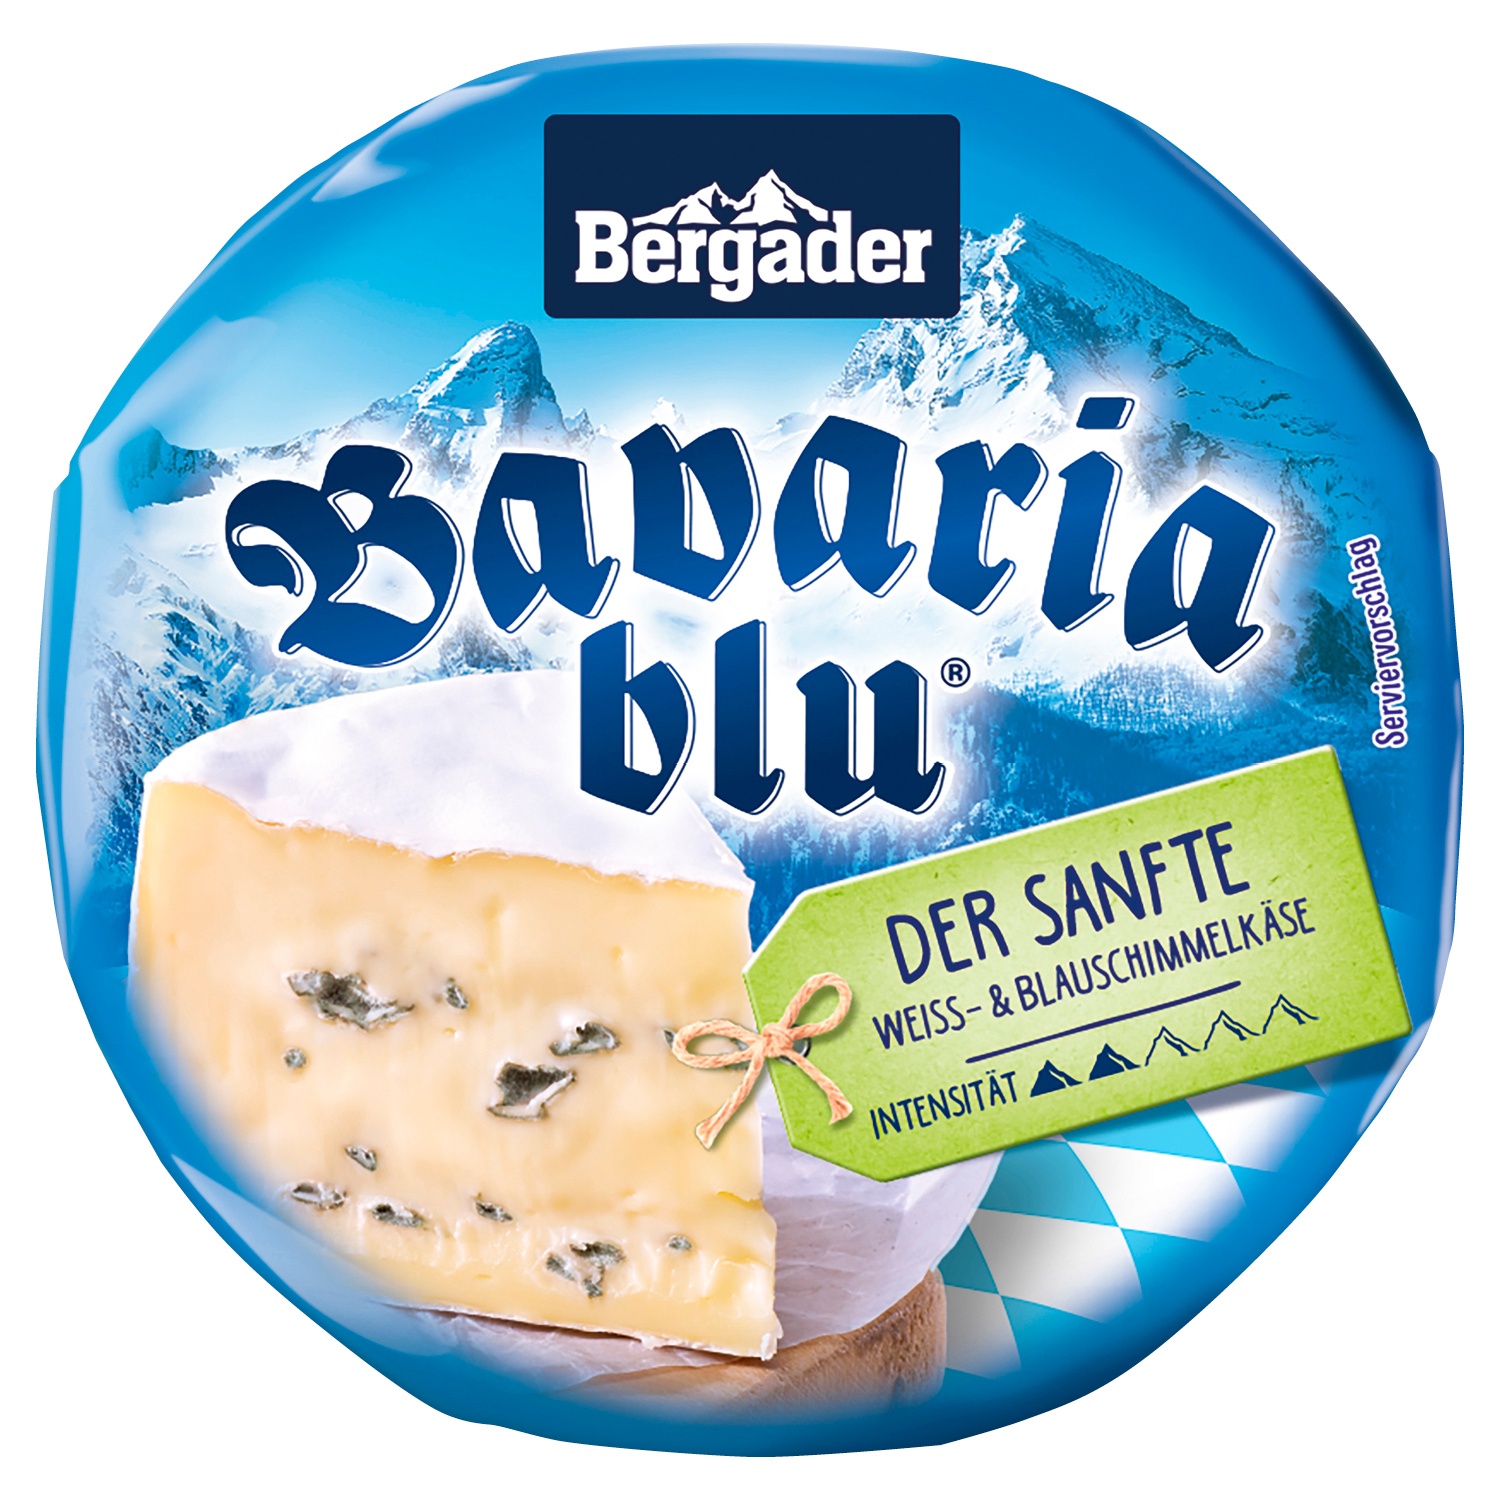 Bergader Bavaria blu 150g